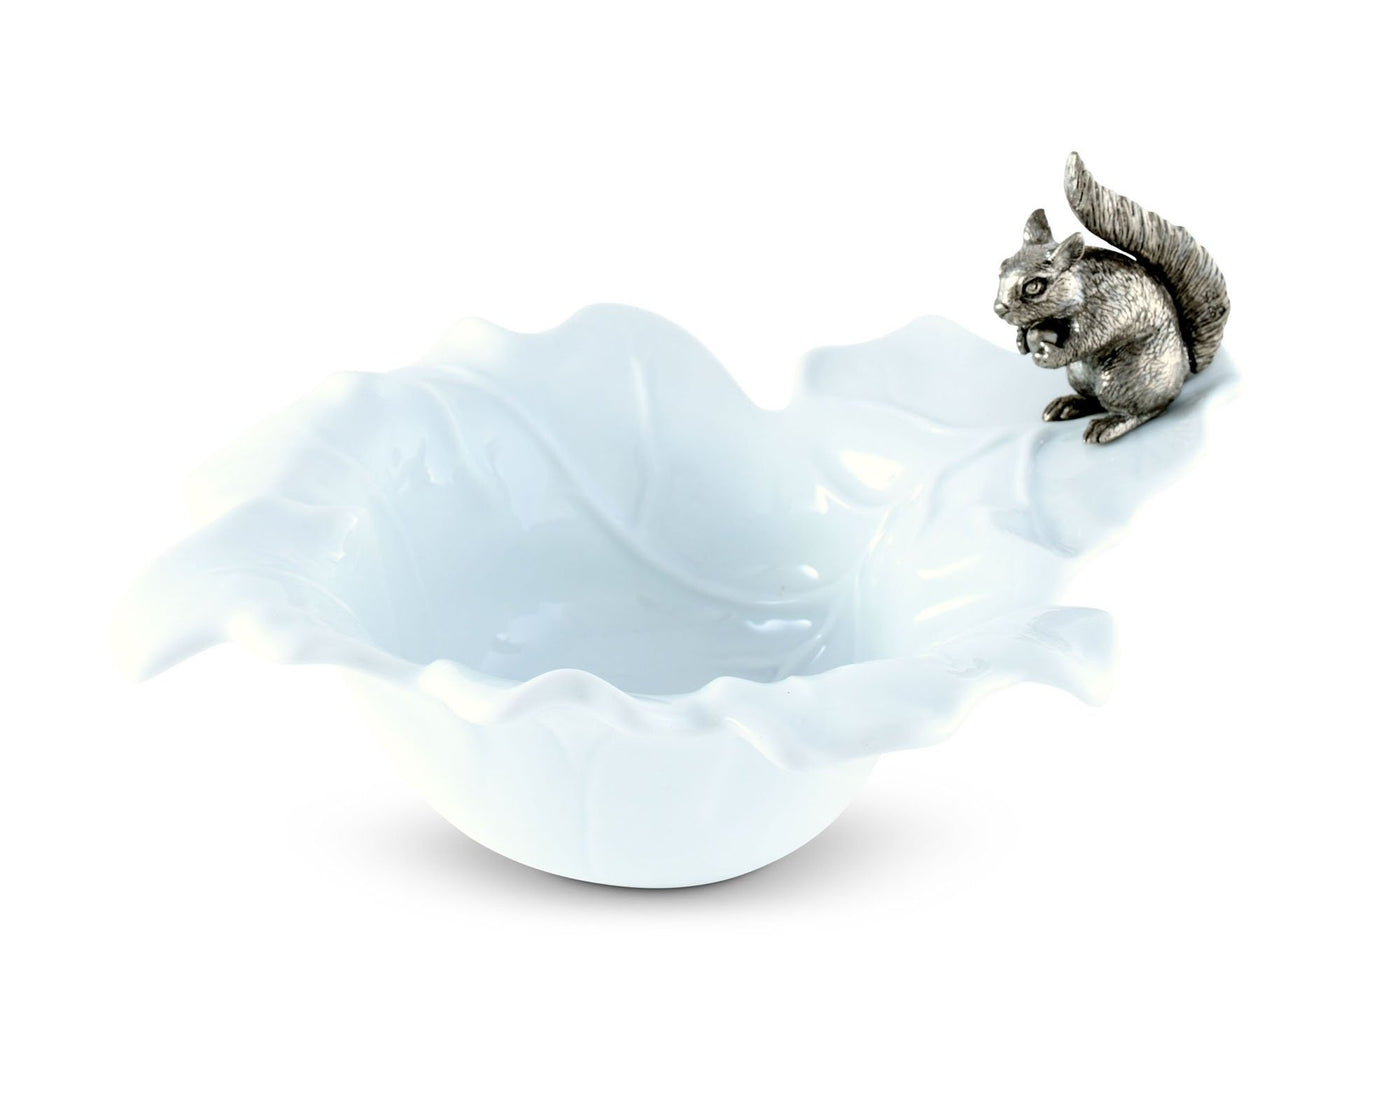 Fine Porcelain Leaf Bowl With Pewter Squirrel